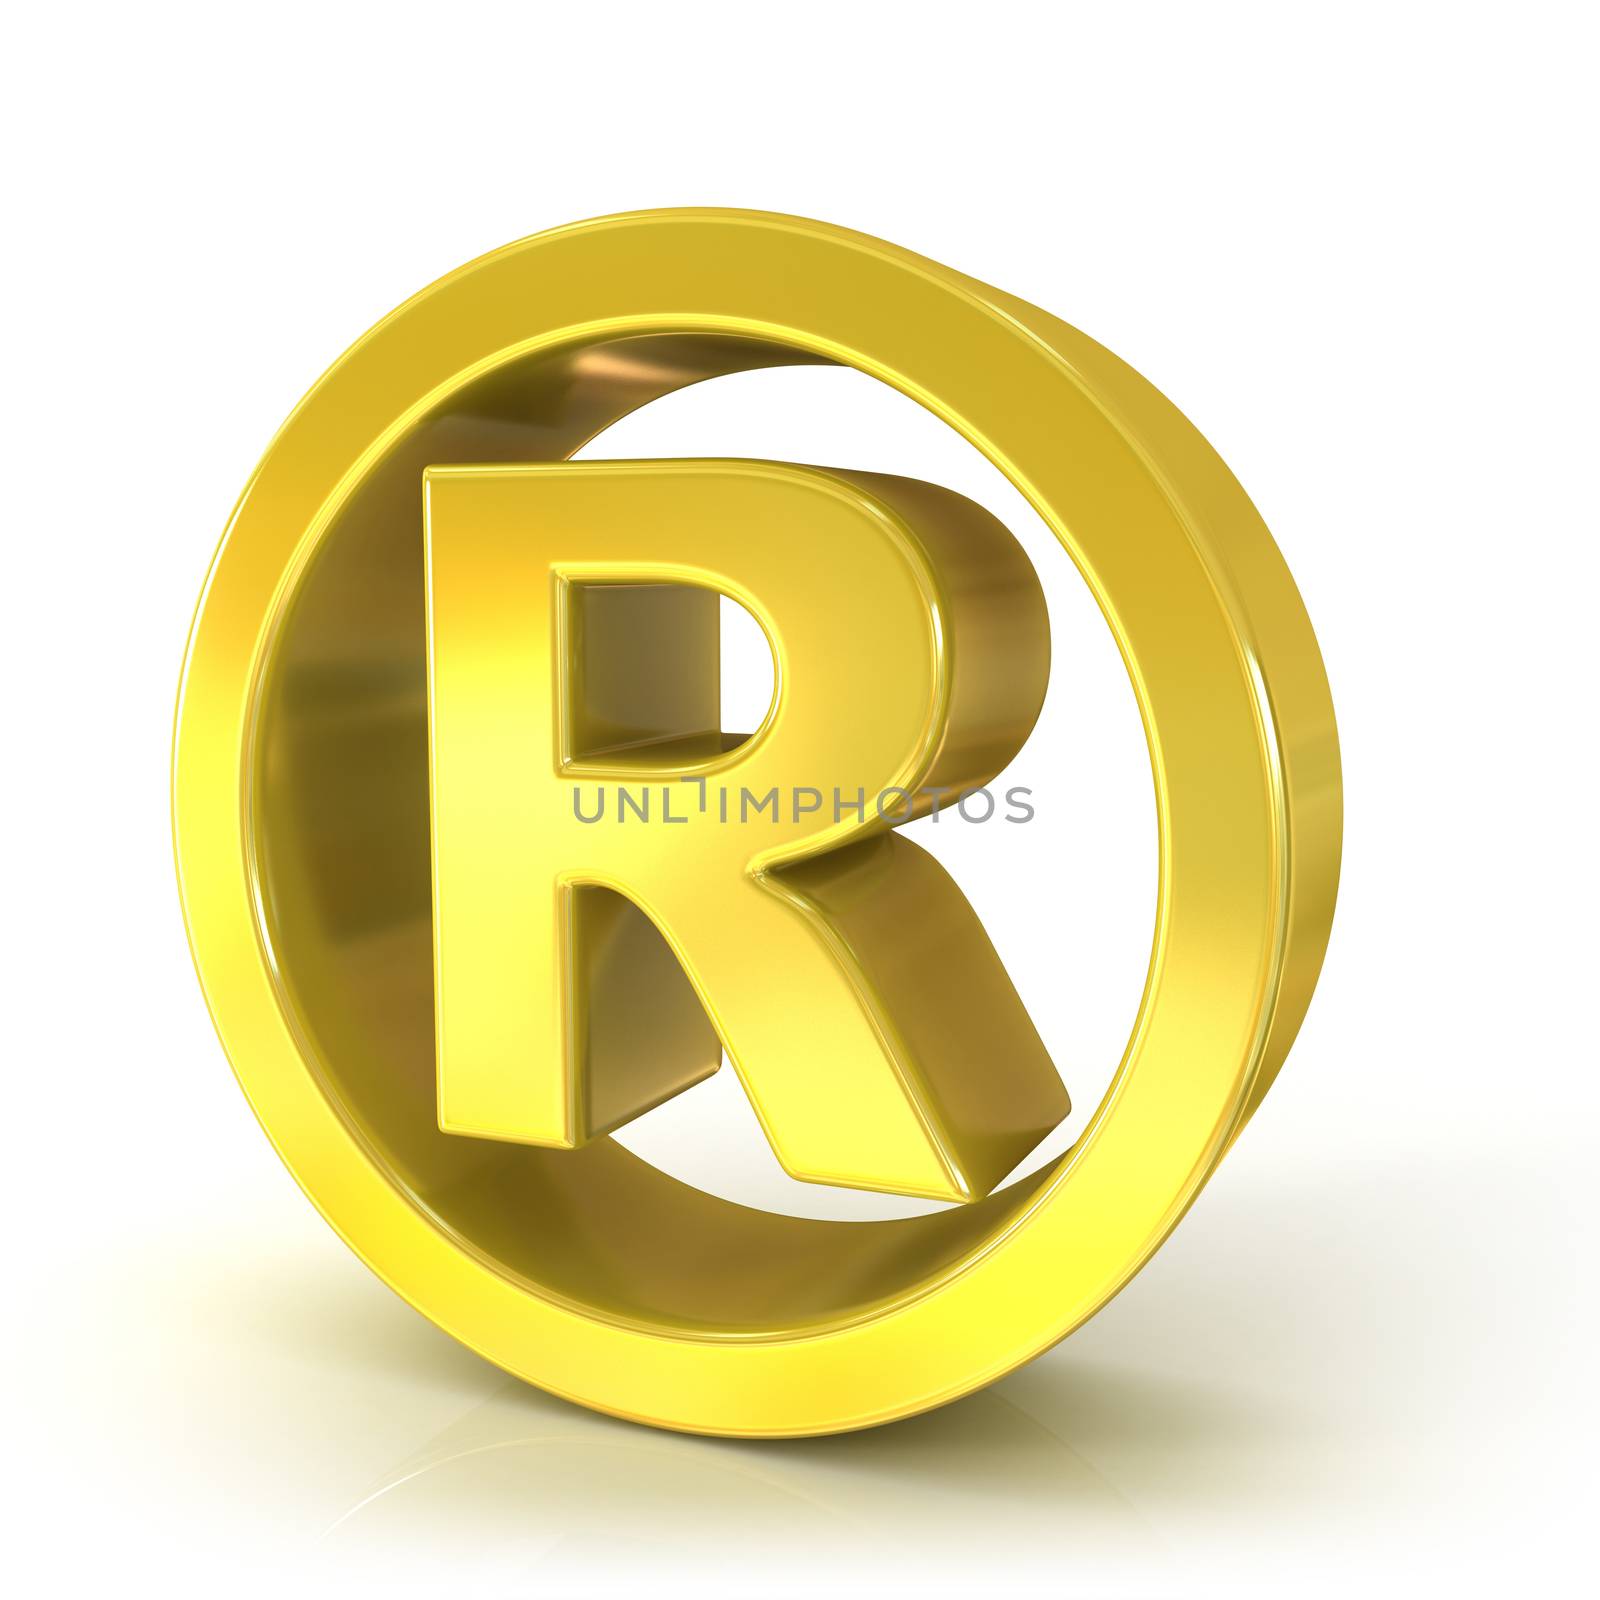 Registered trademark 3D golden sign isolated on white background